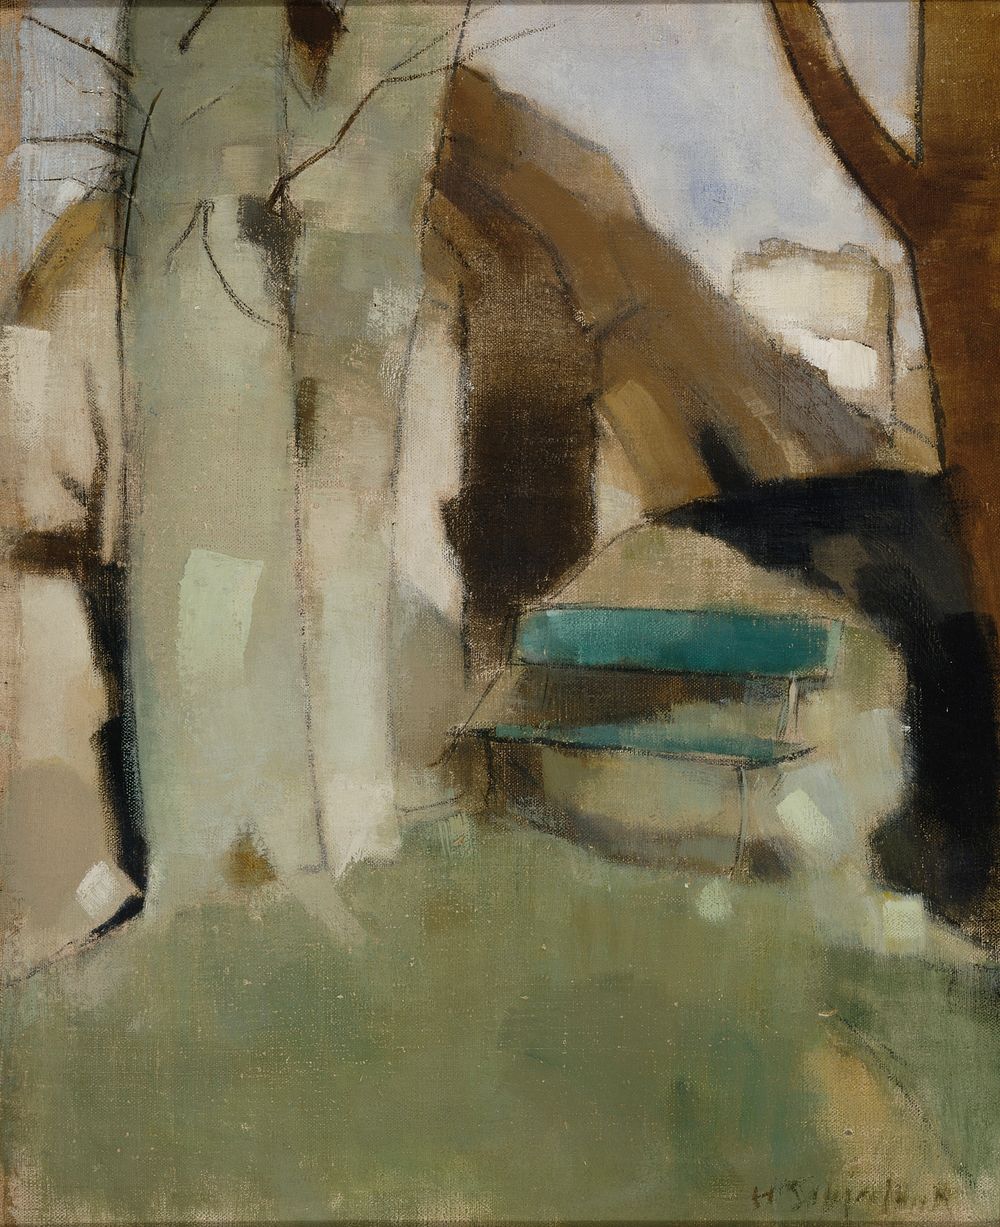 Shadow on the wall ii (green bench), 1928, Helene Schjerfbeck